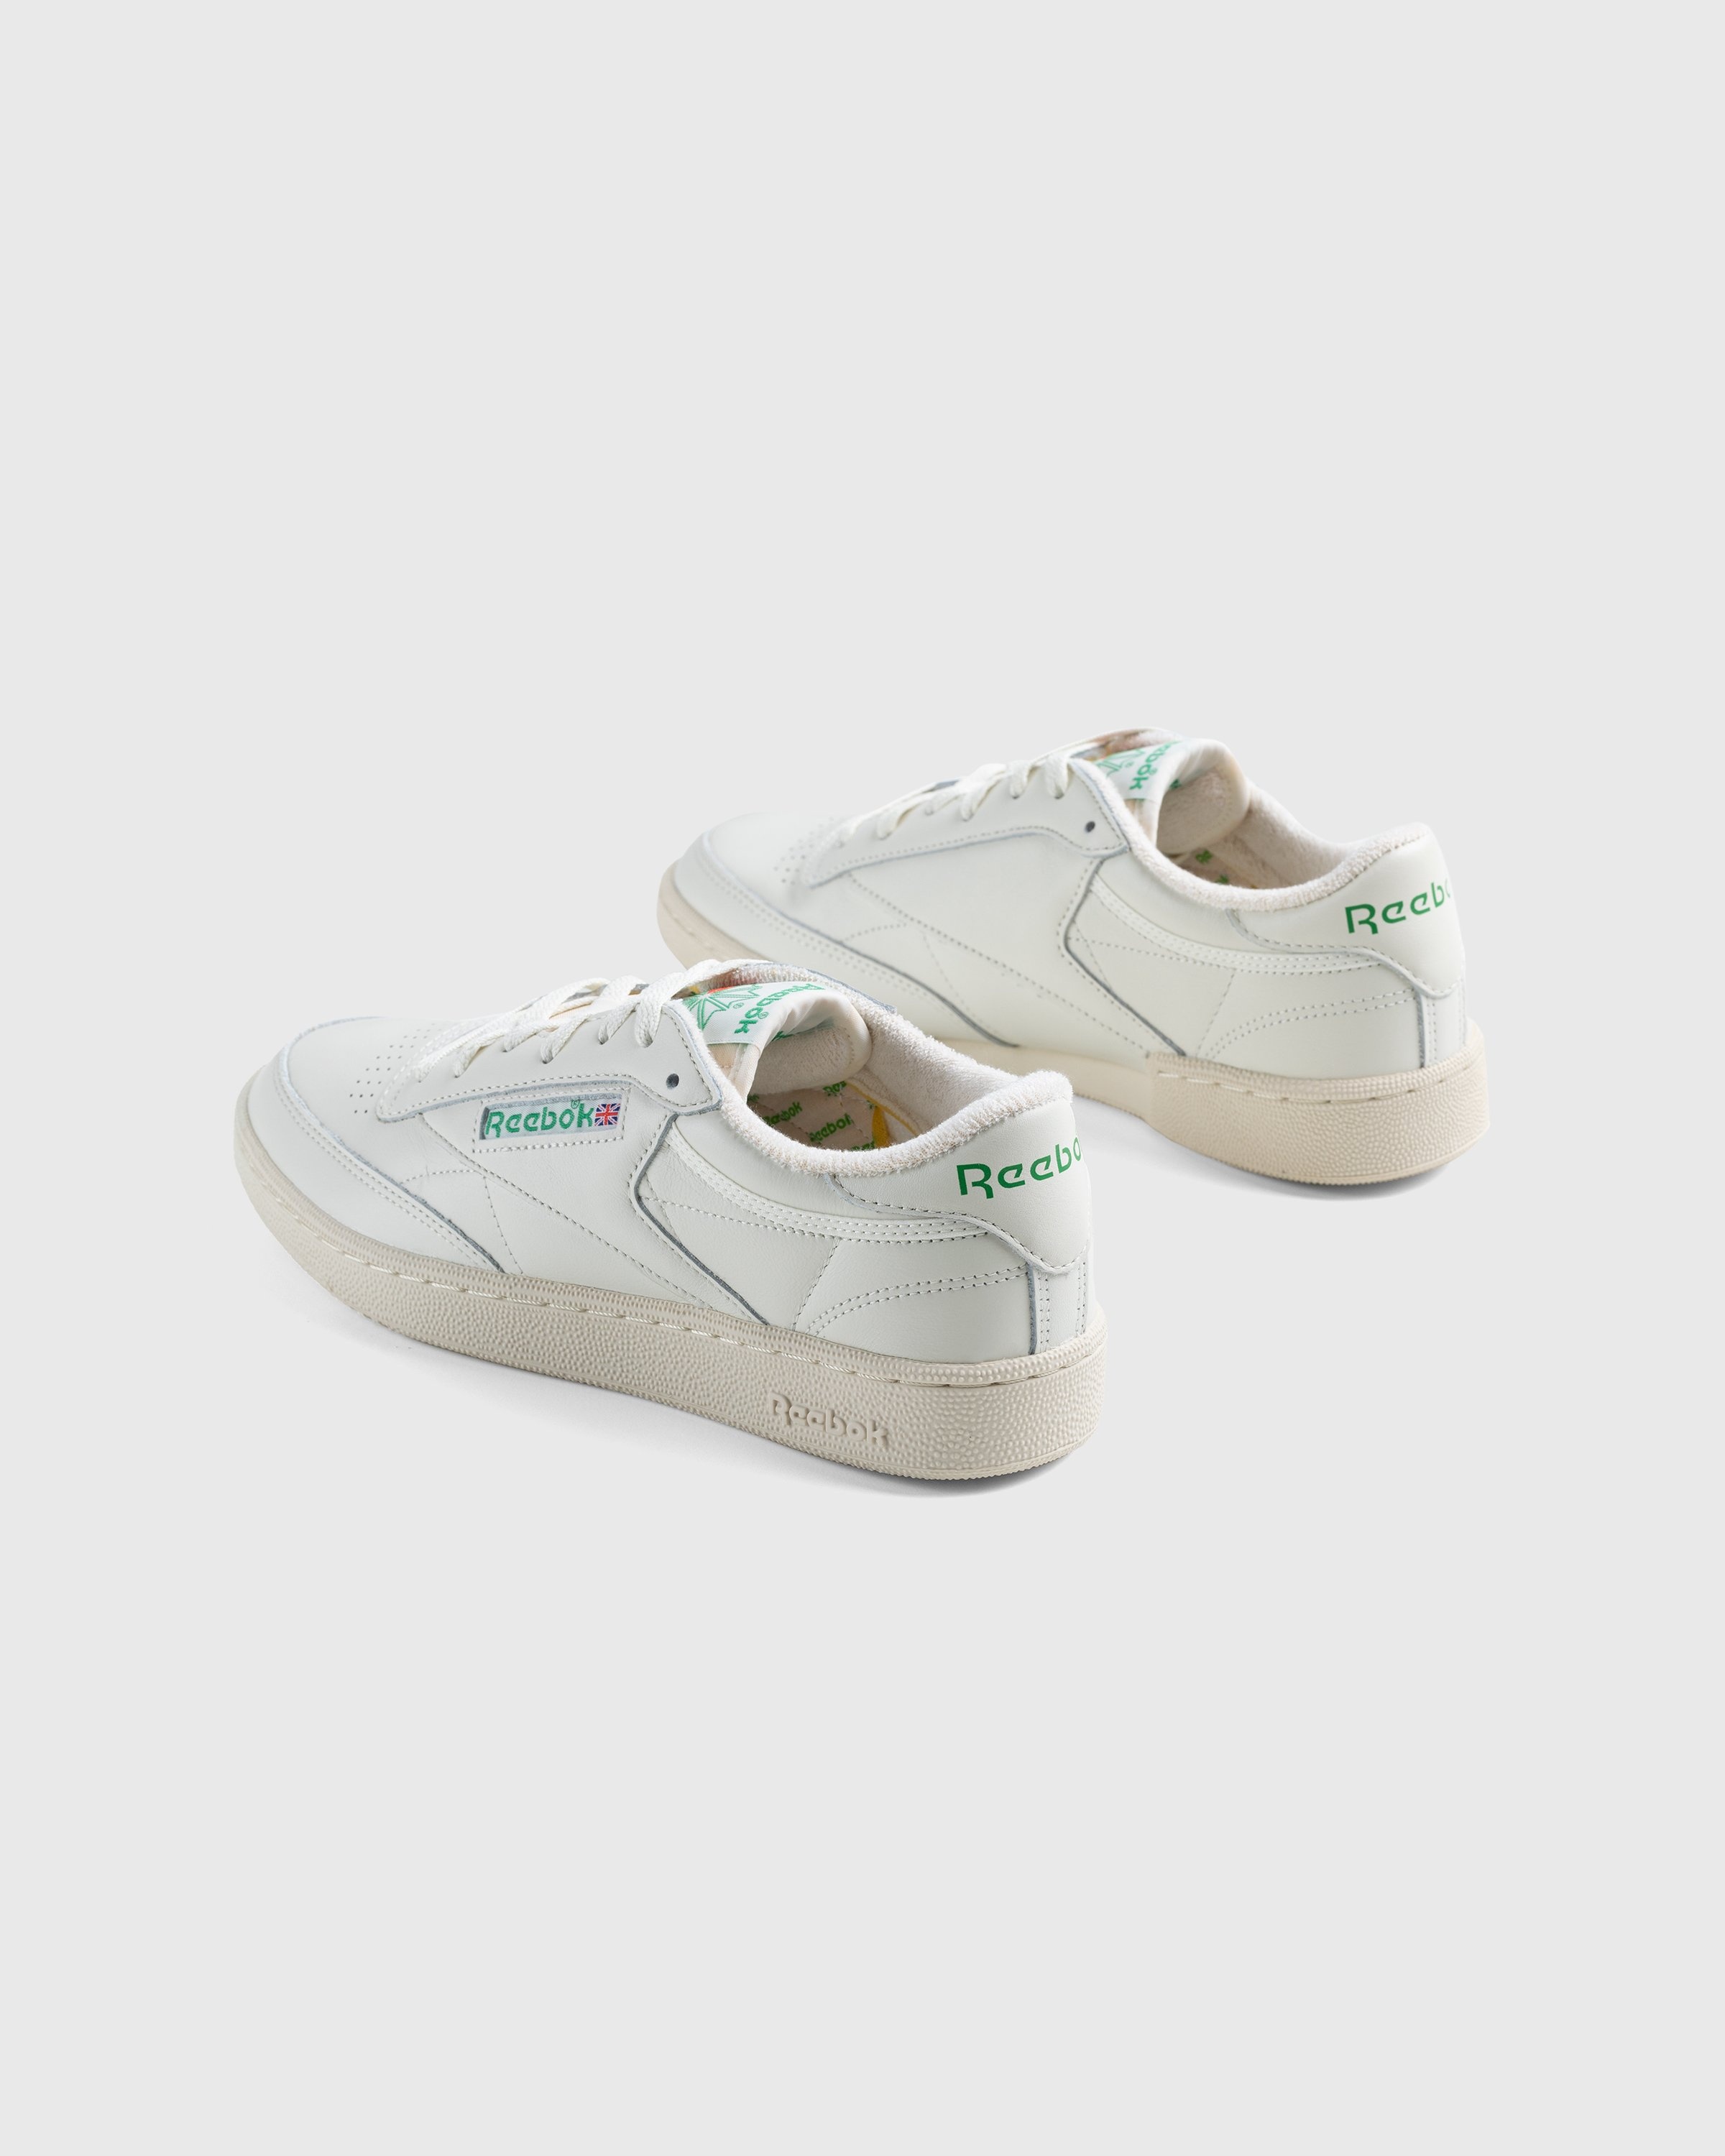 Reebok – Club C 85 Vintage Chalk - Low Top Sneakers - White - Image 4